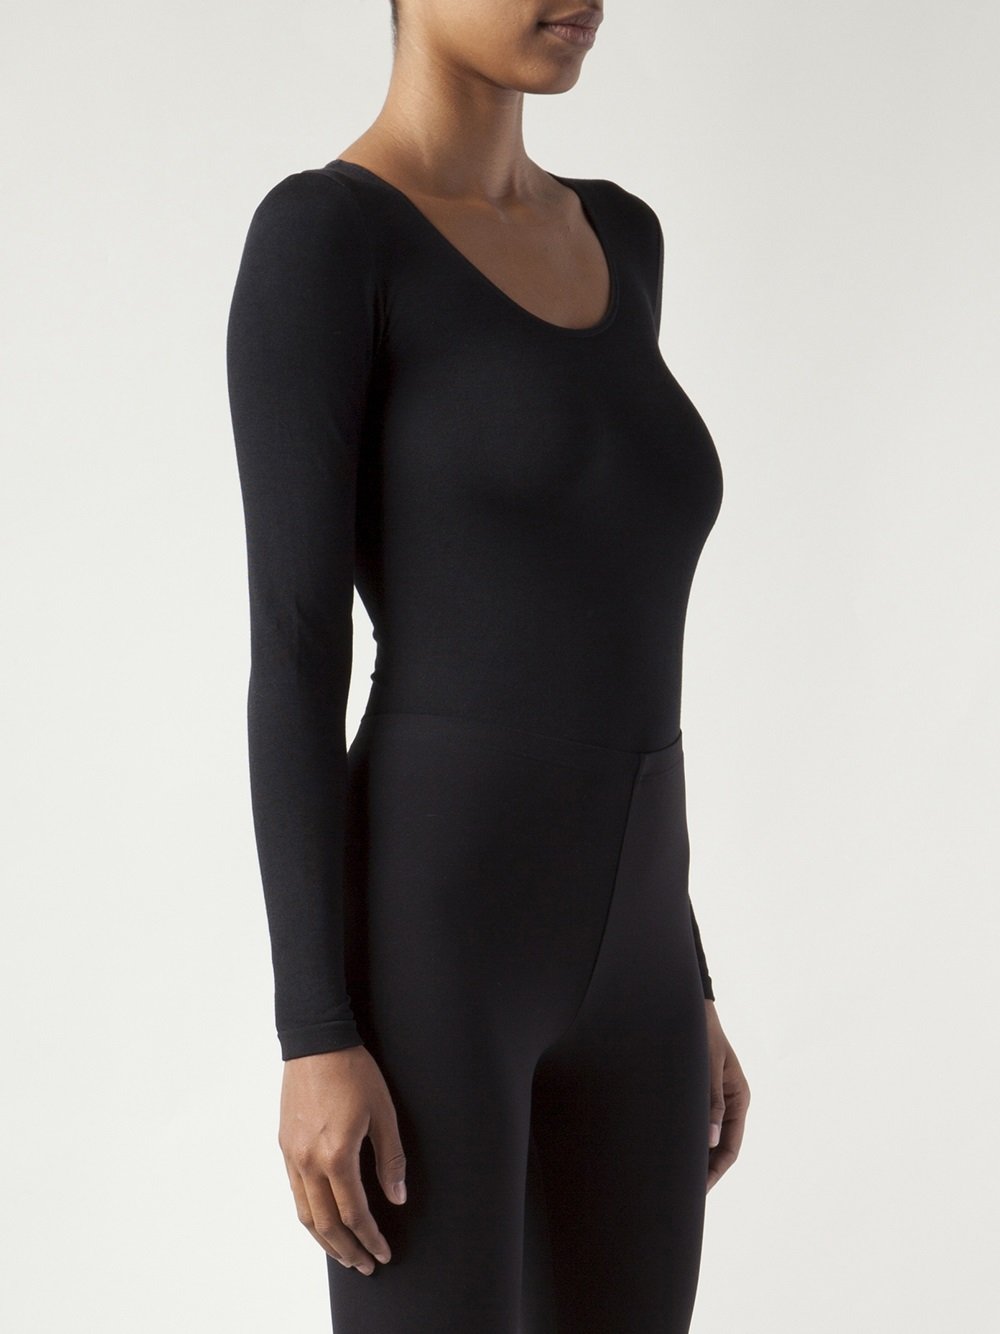 Lyst - Wolford Long Sleeve Bodysuit in Black